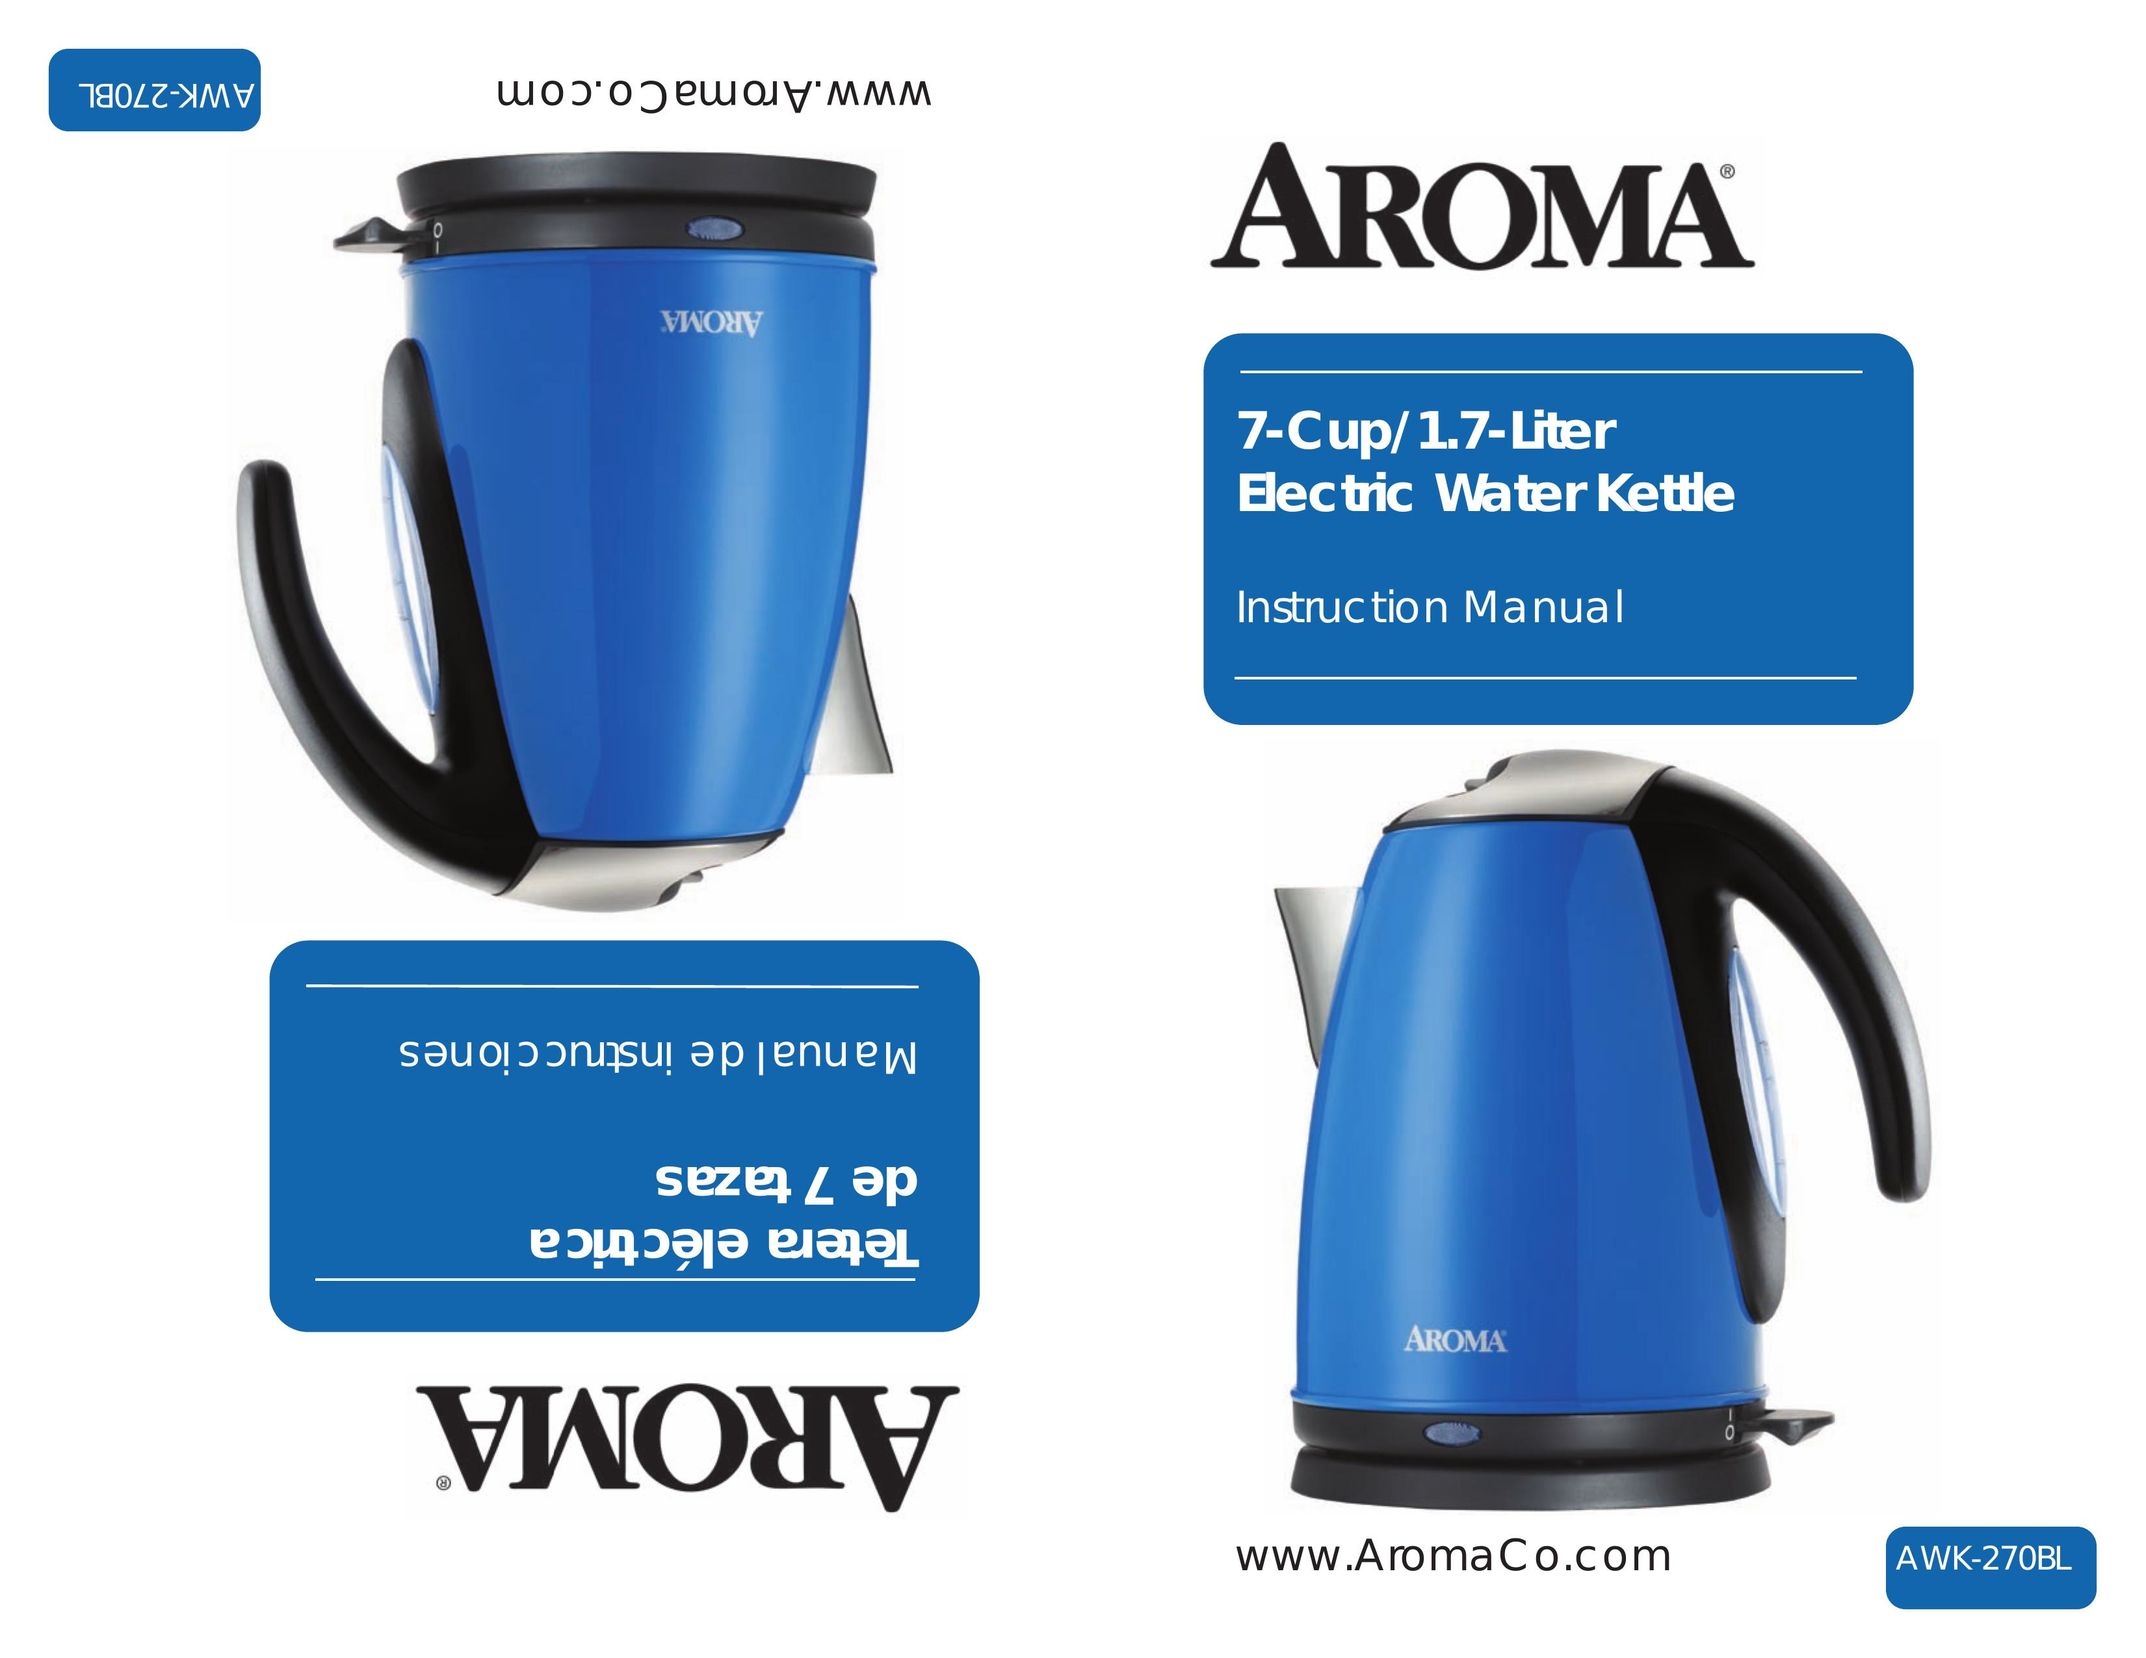 Aroma AWK-270BL Hot Beverage Maker User Manual